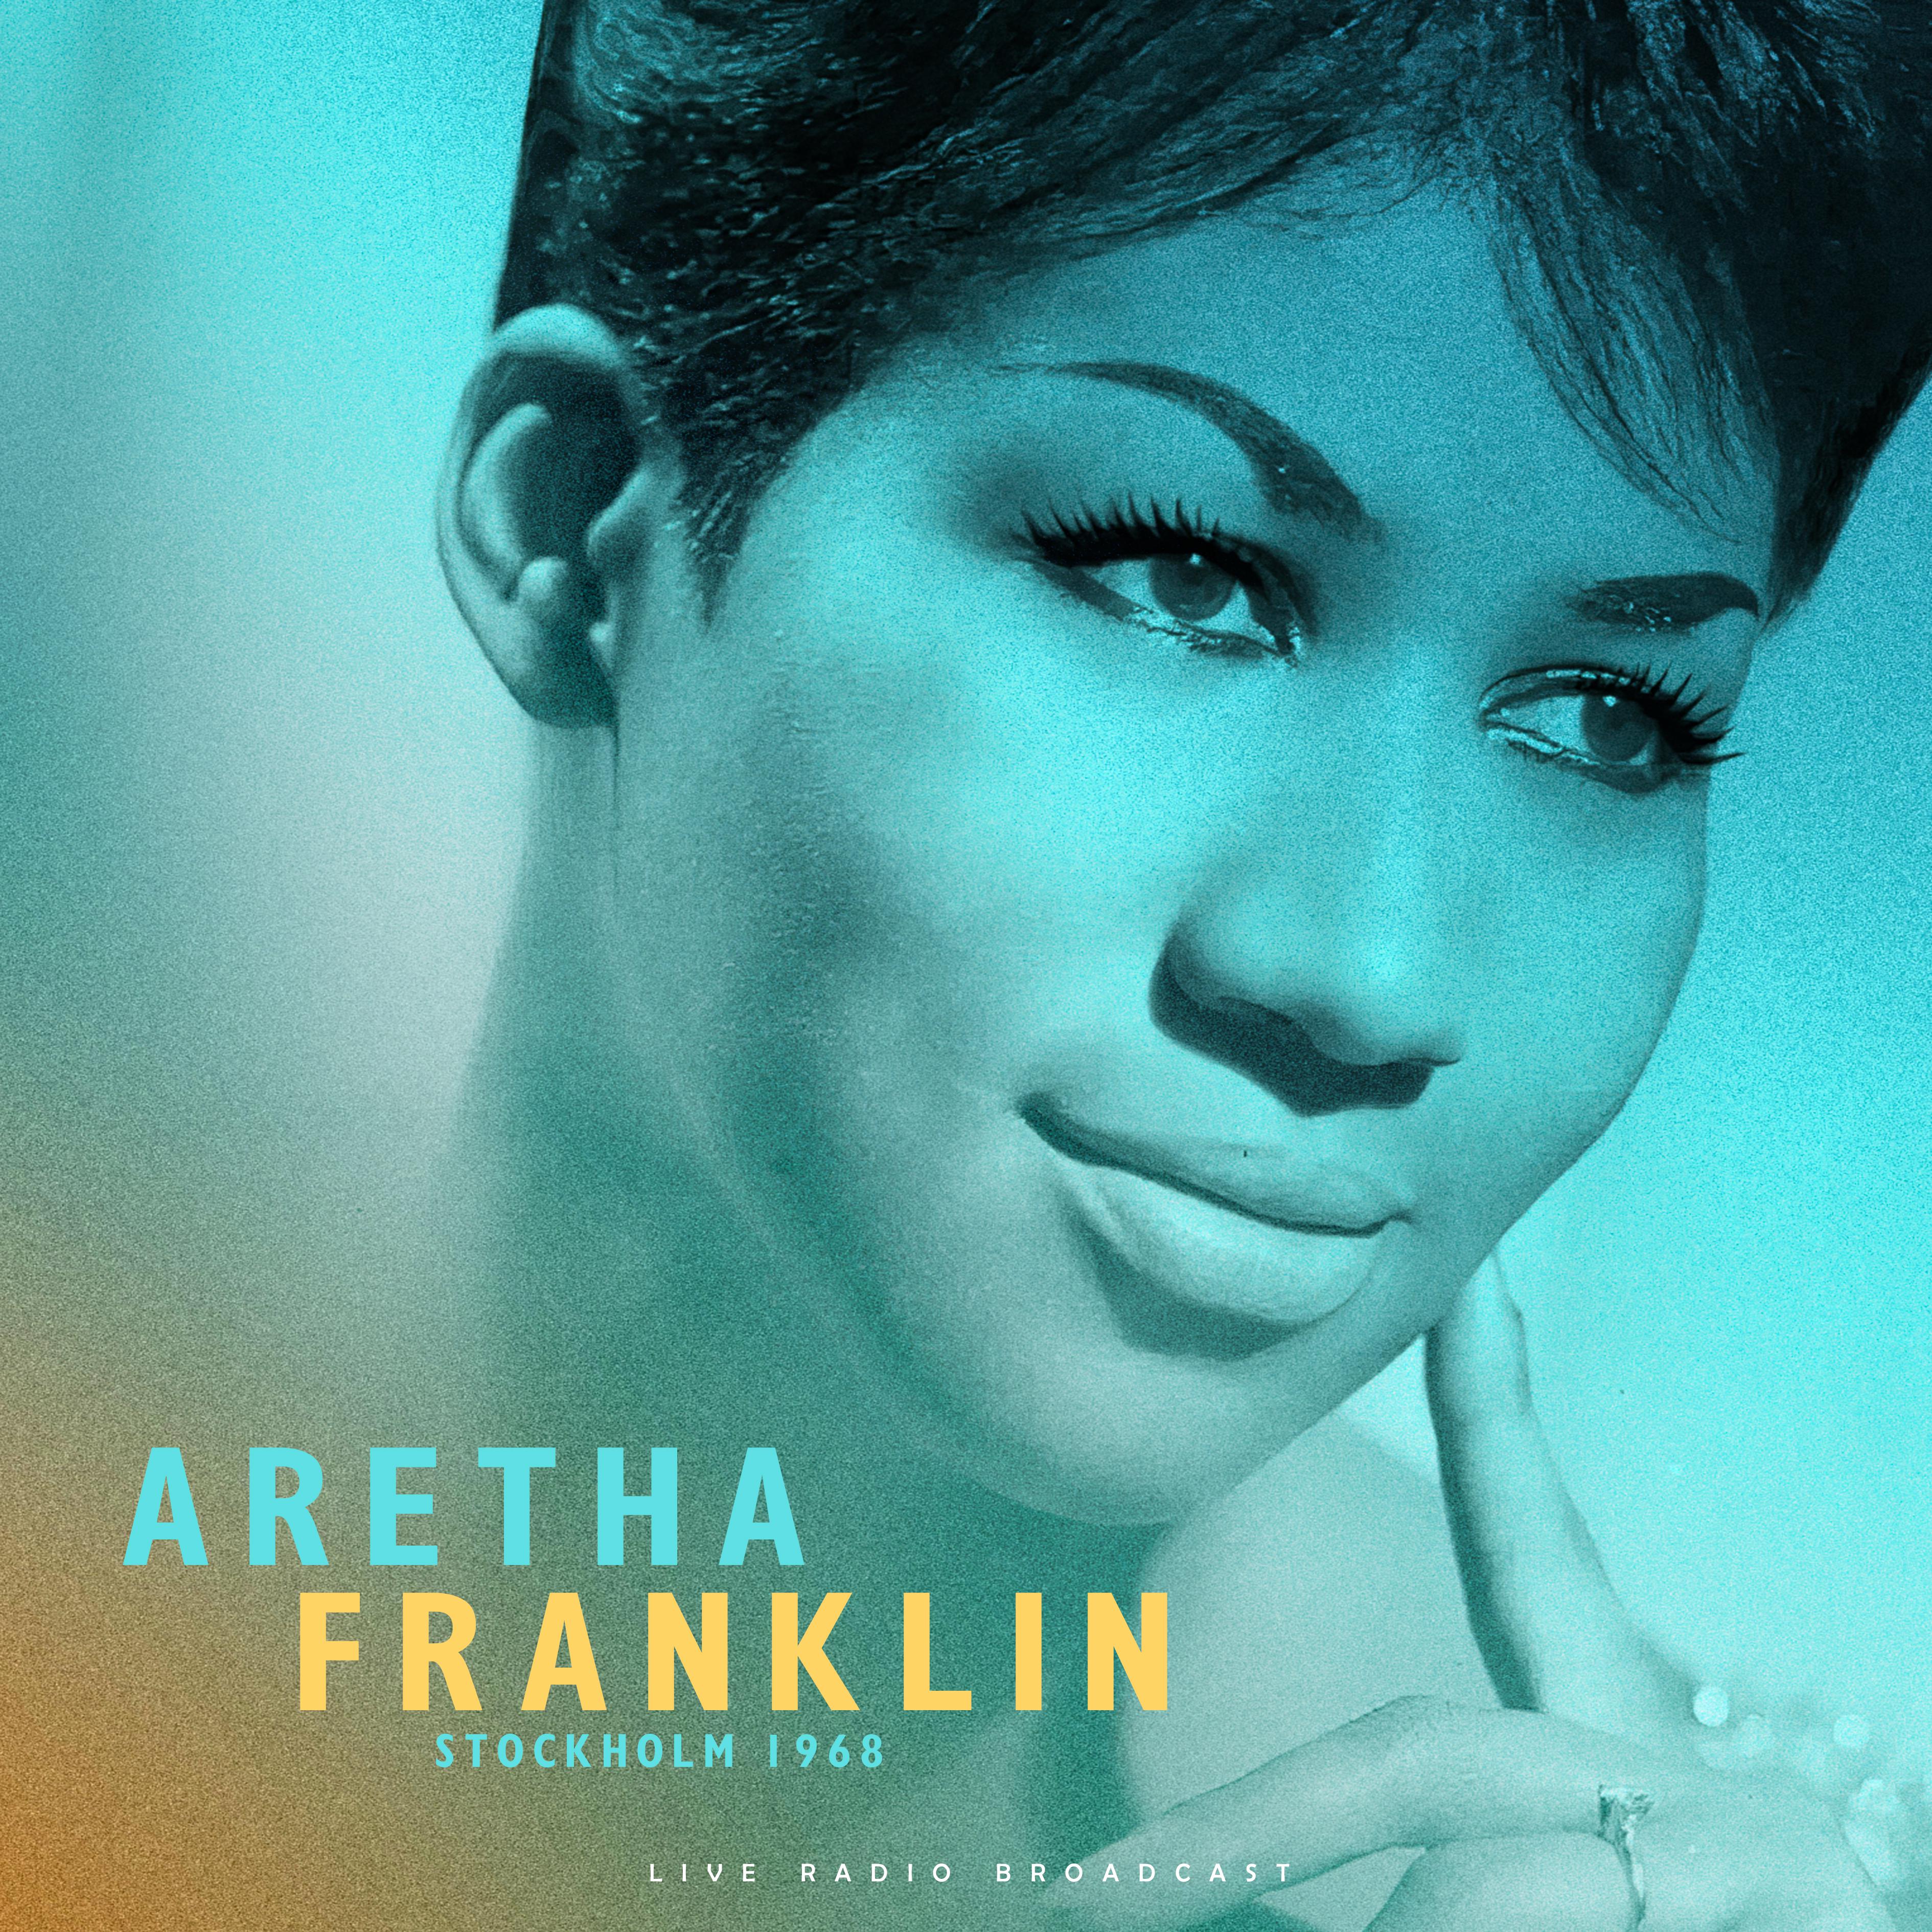 Aretha Franklin - I Never Loved A Man (The Way I Love You) (live)